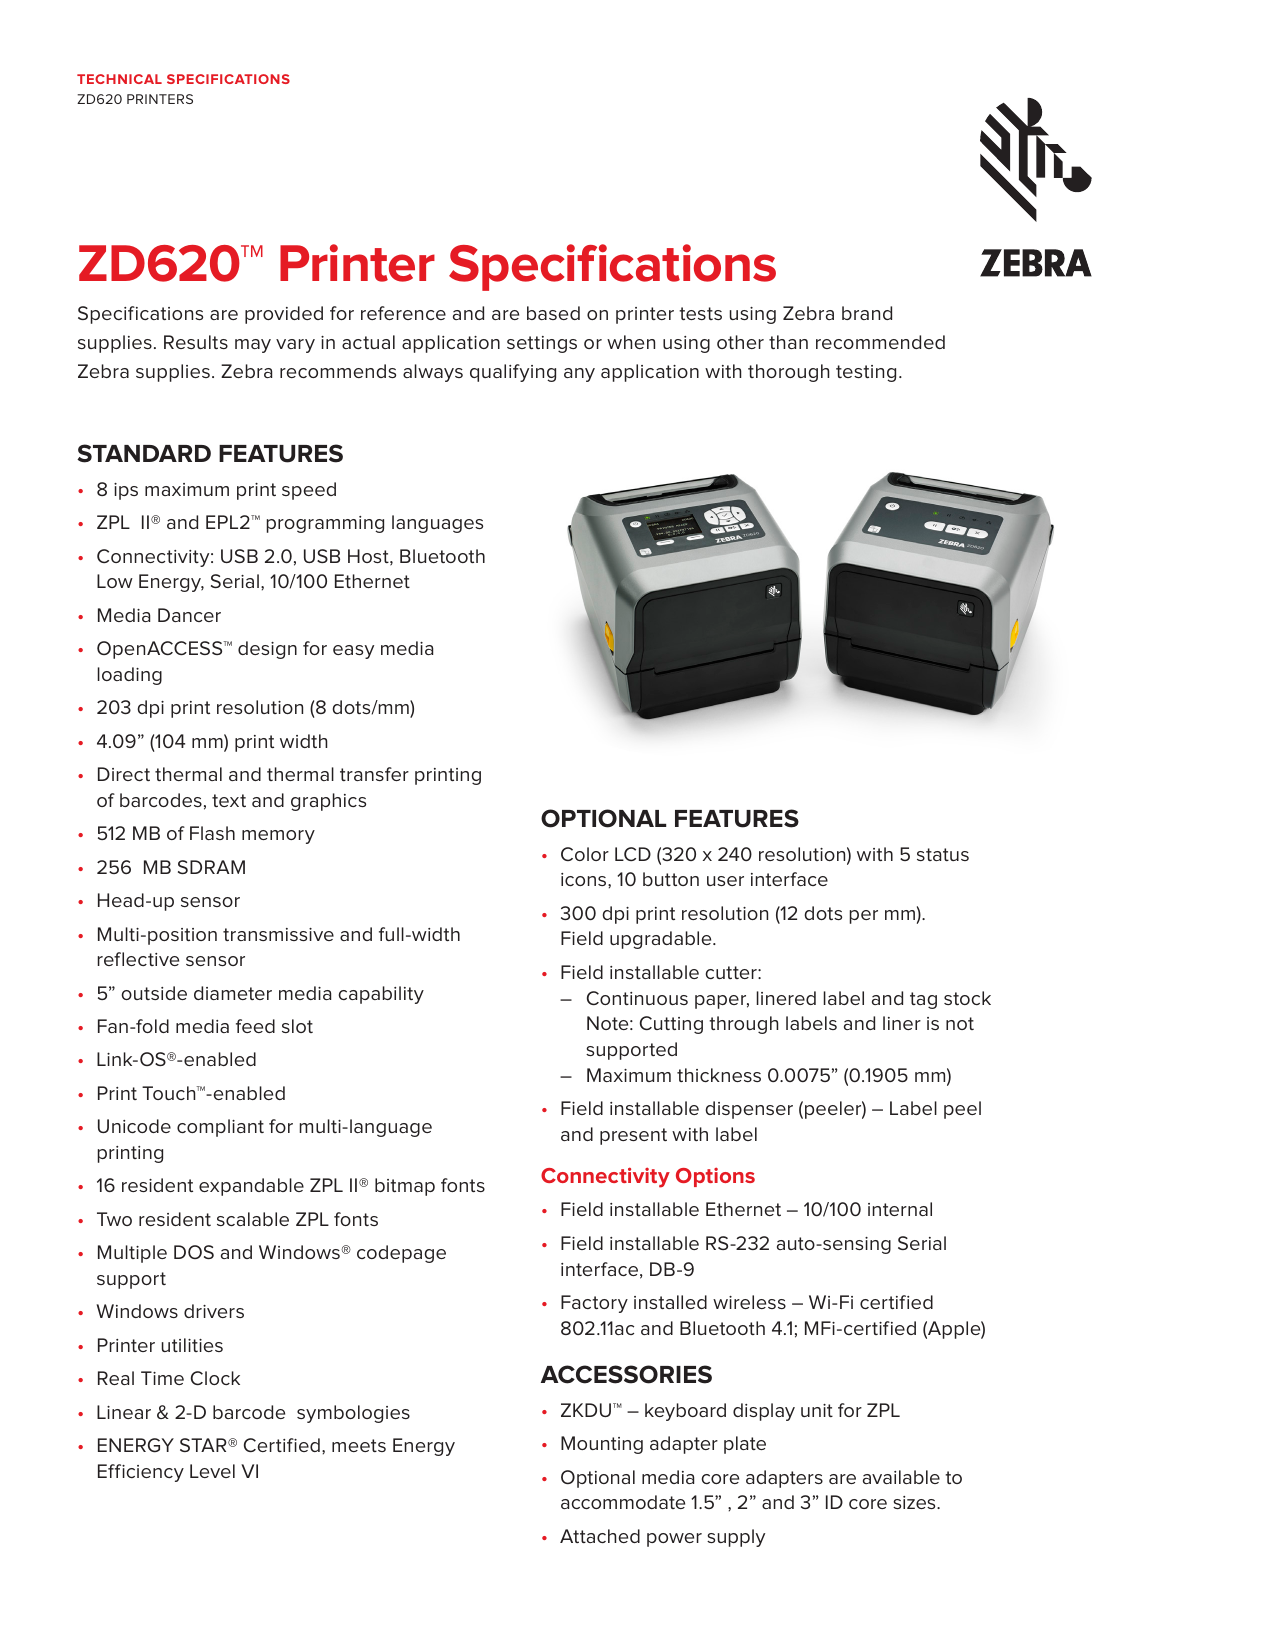 zebra gx430t resolution